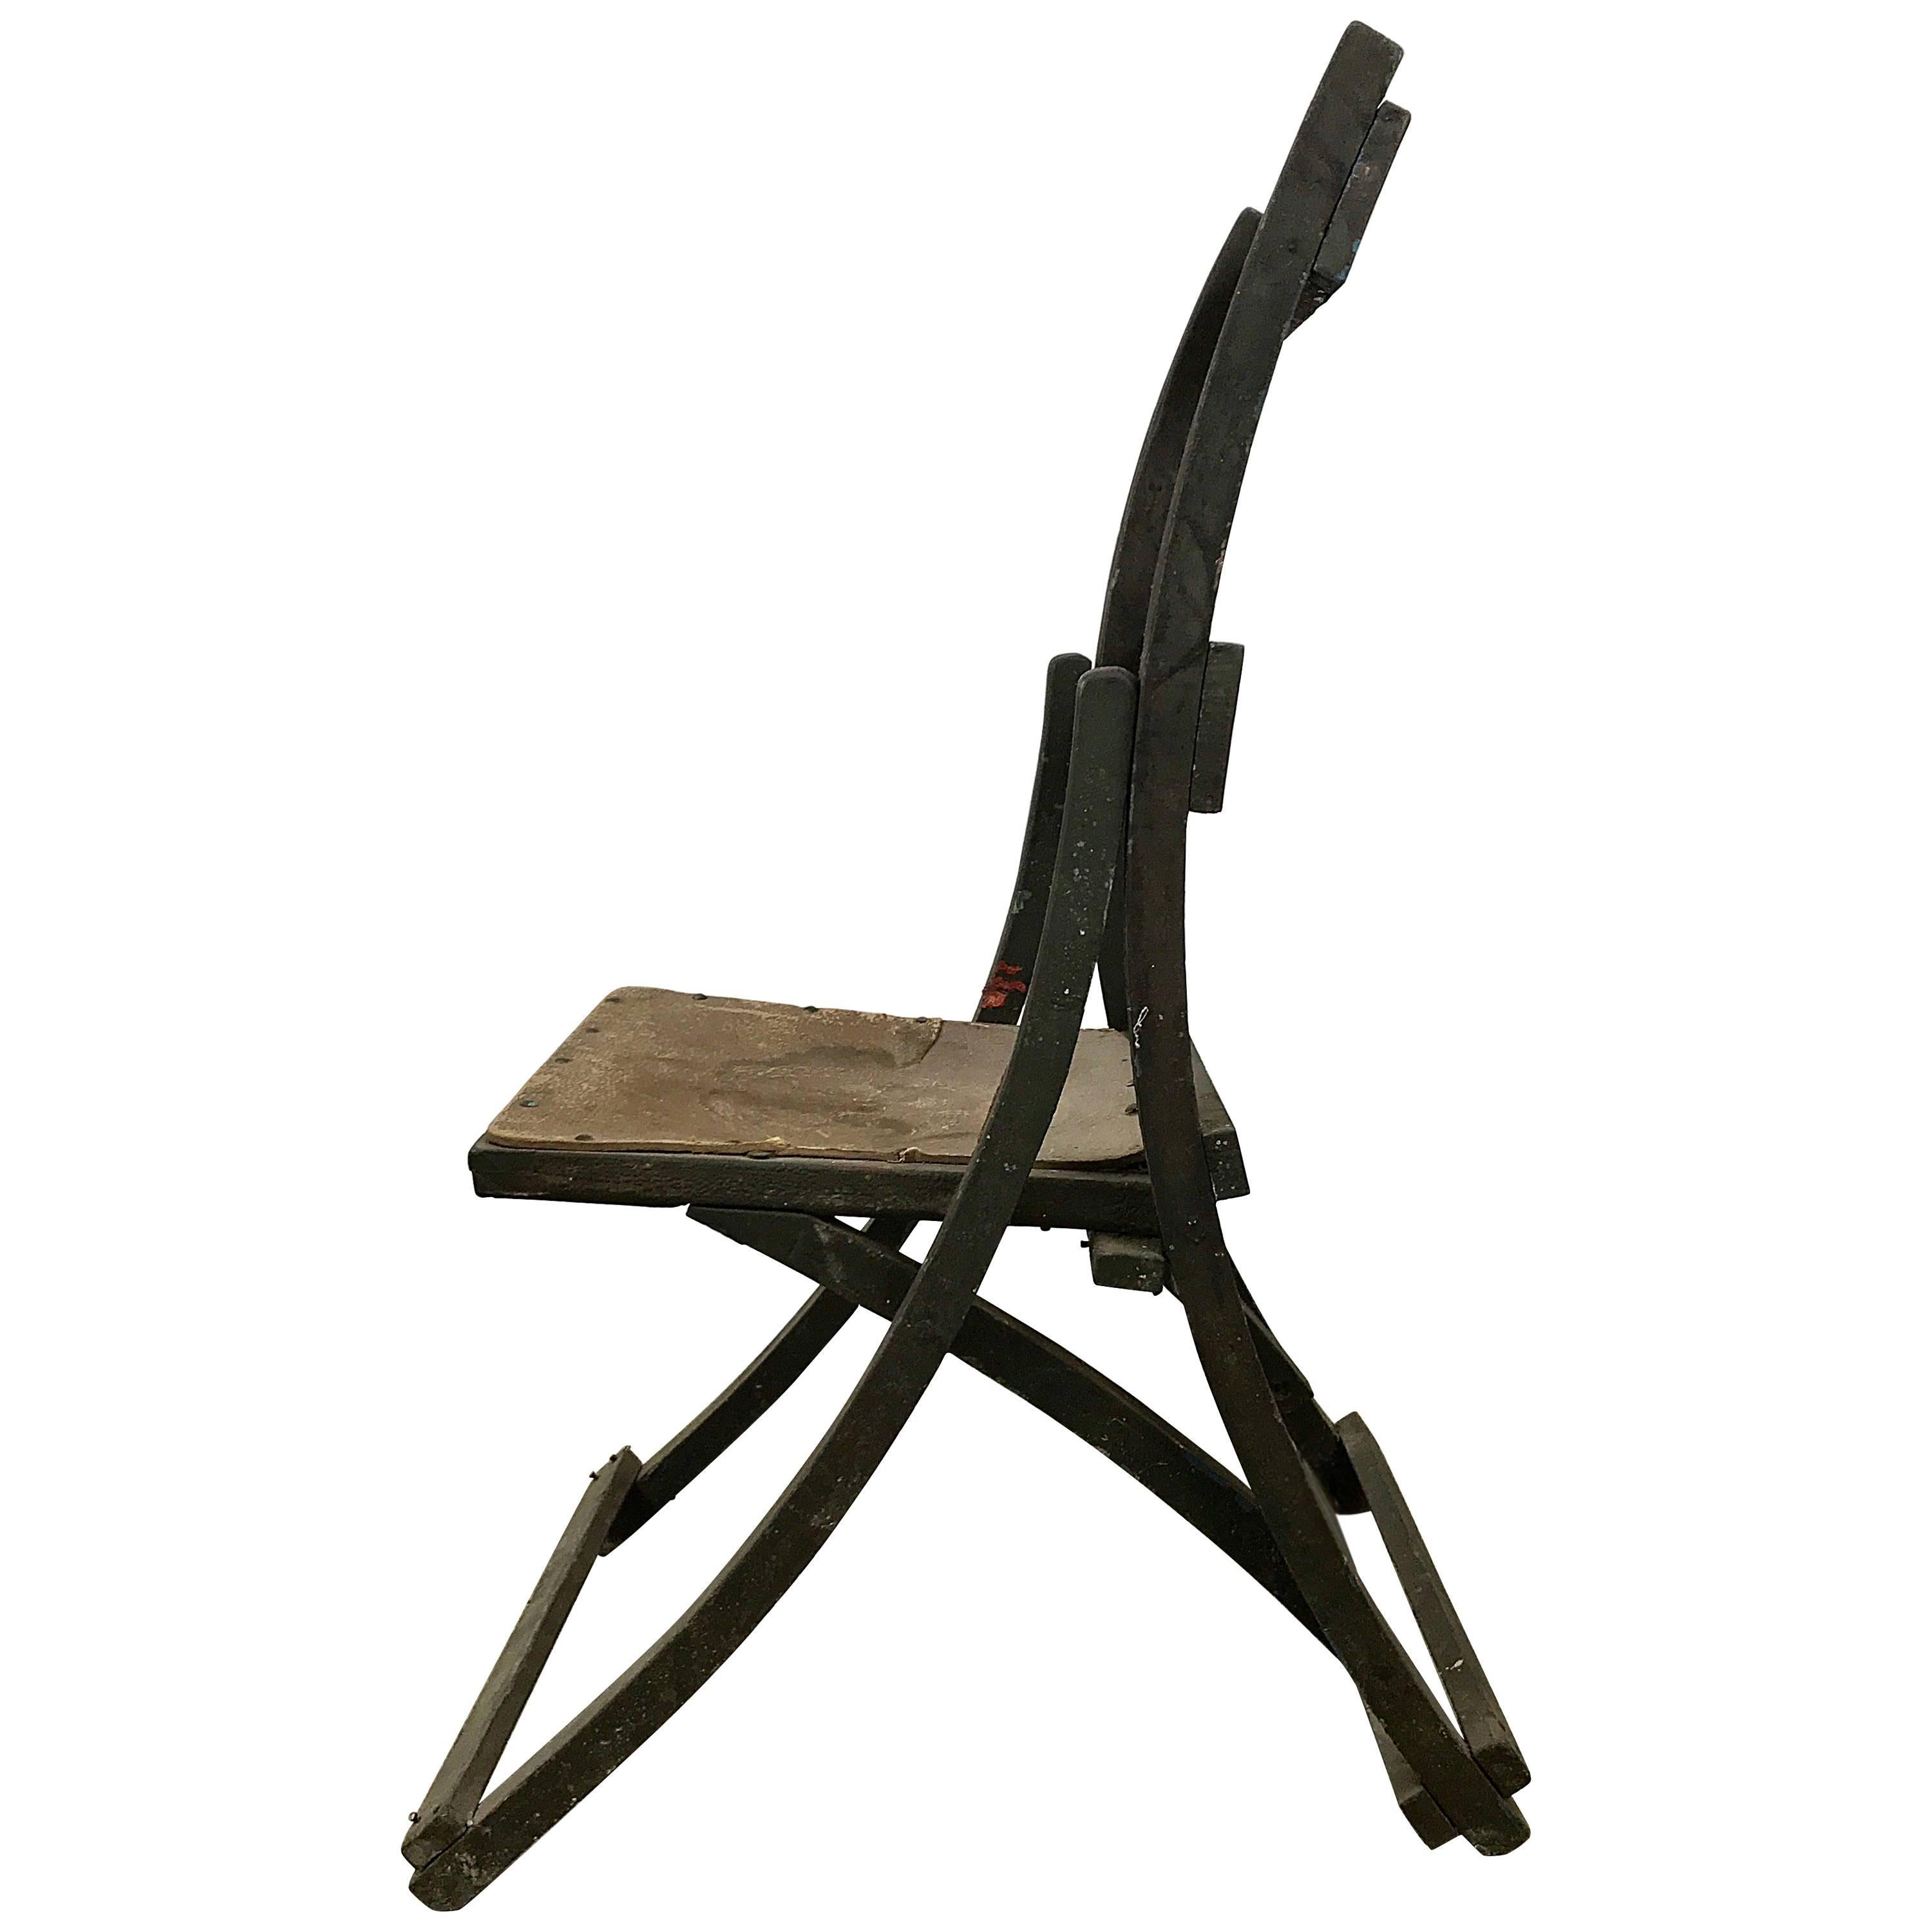 Early Sucsessionist Jugendstil Folding Chair in Richard Riemerschmid Manner For Sale